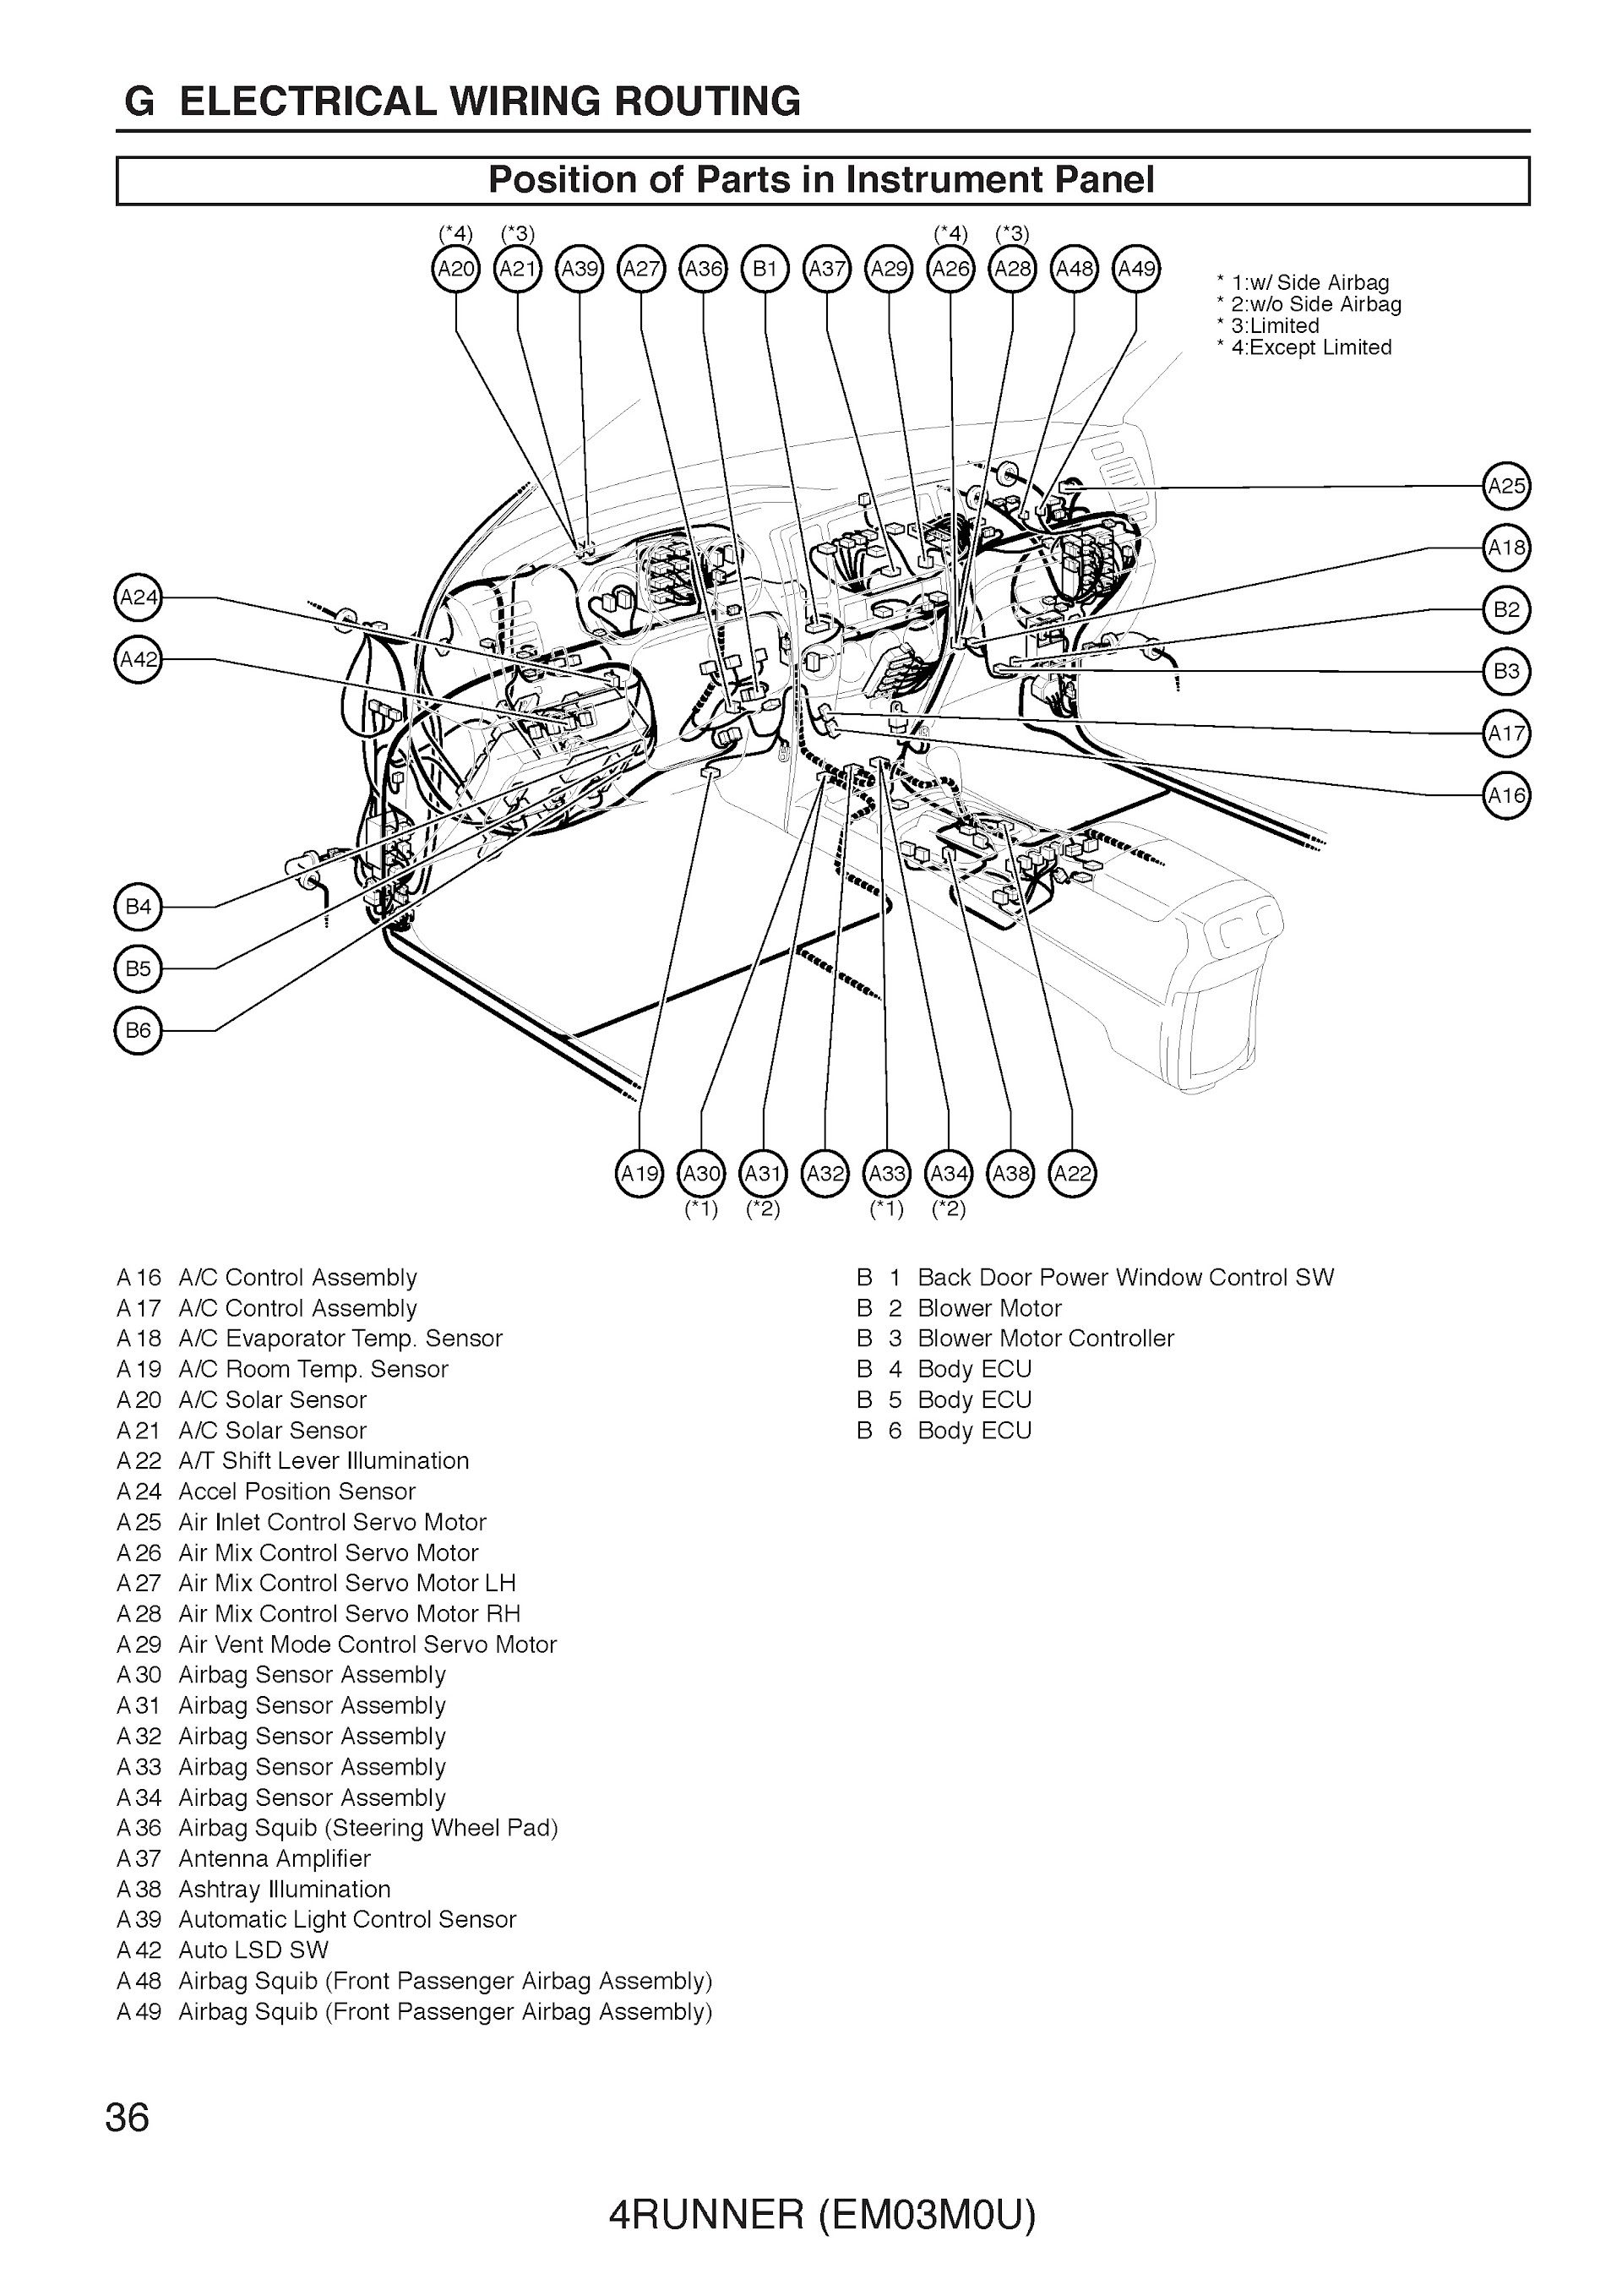 Toyota 4Runner Repair Manual, Electrical Wiring Routing